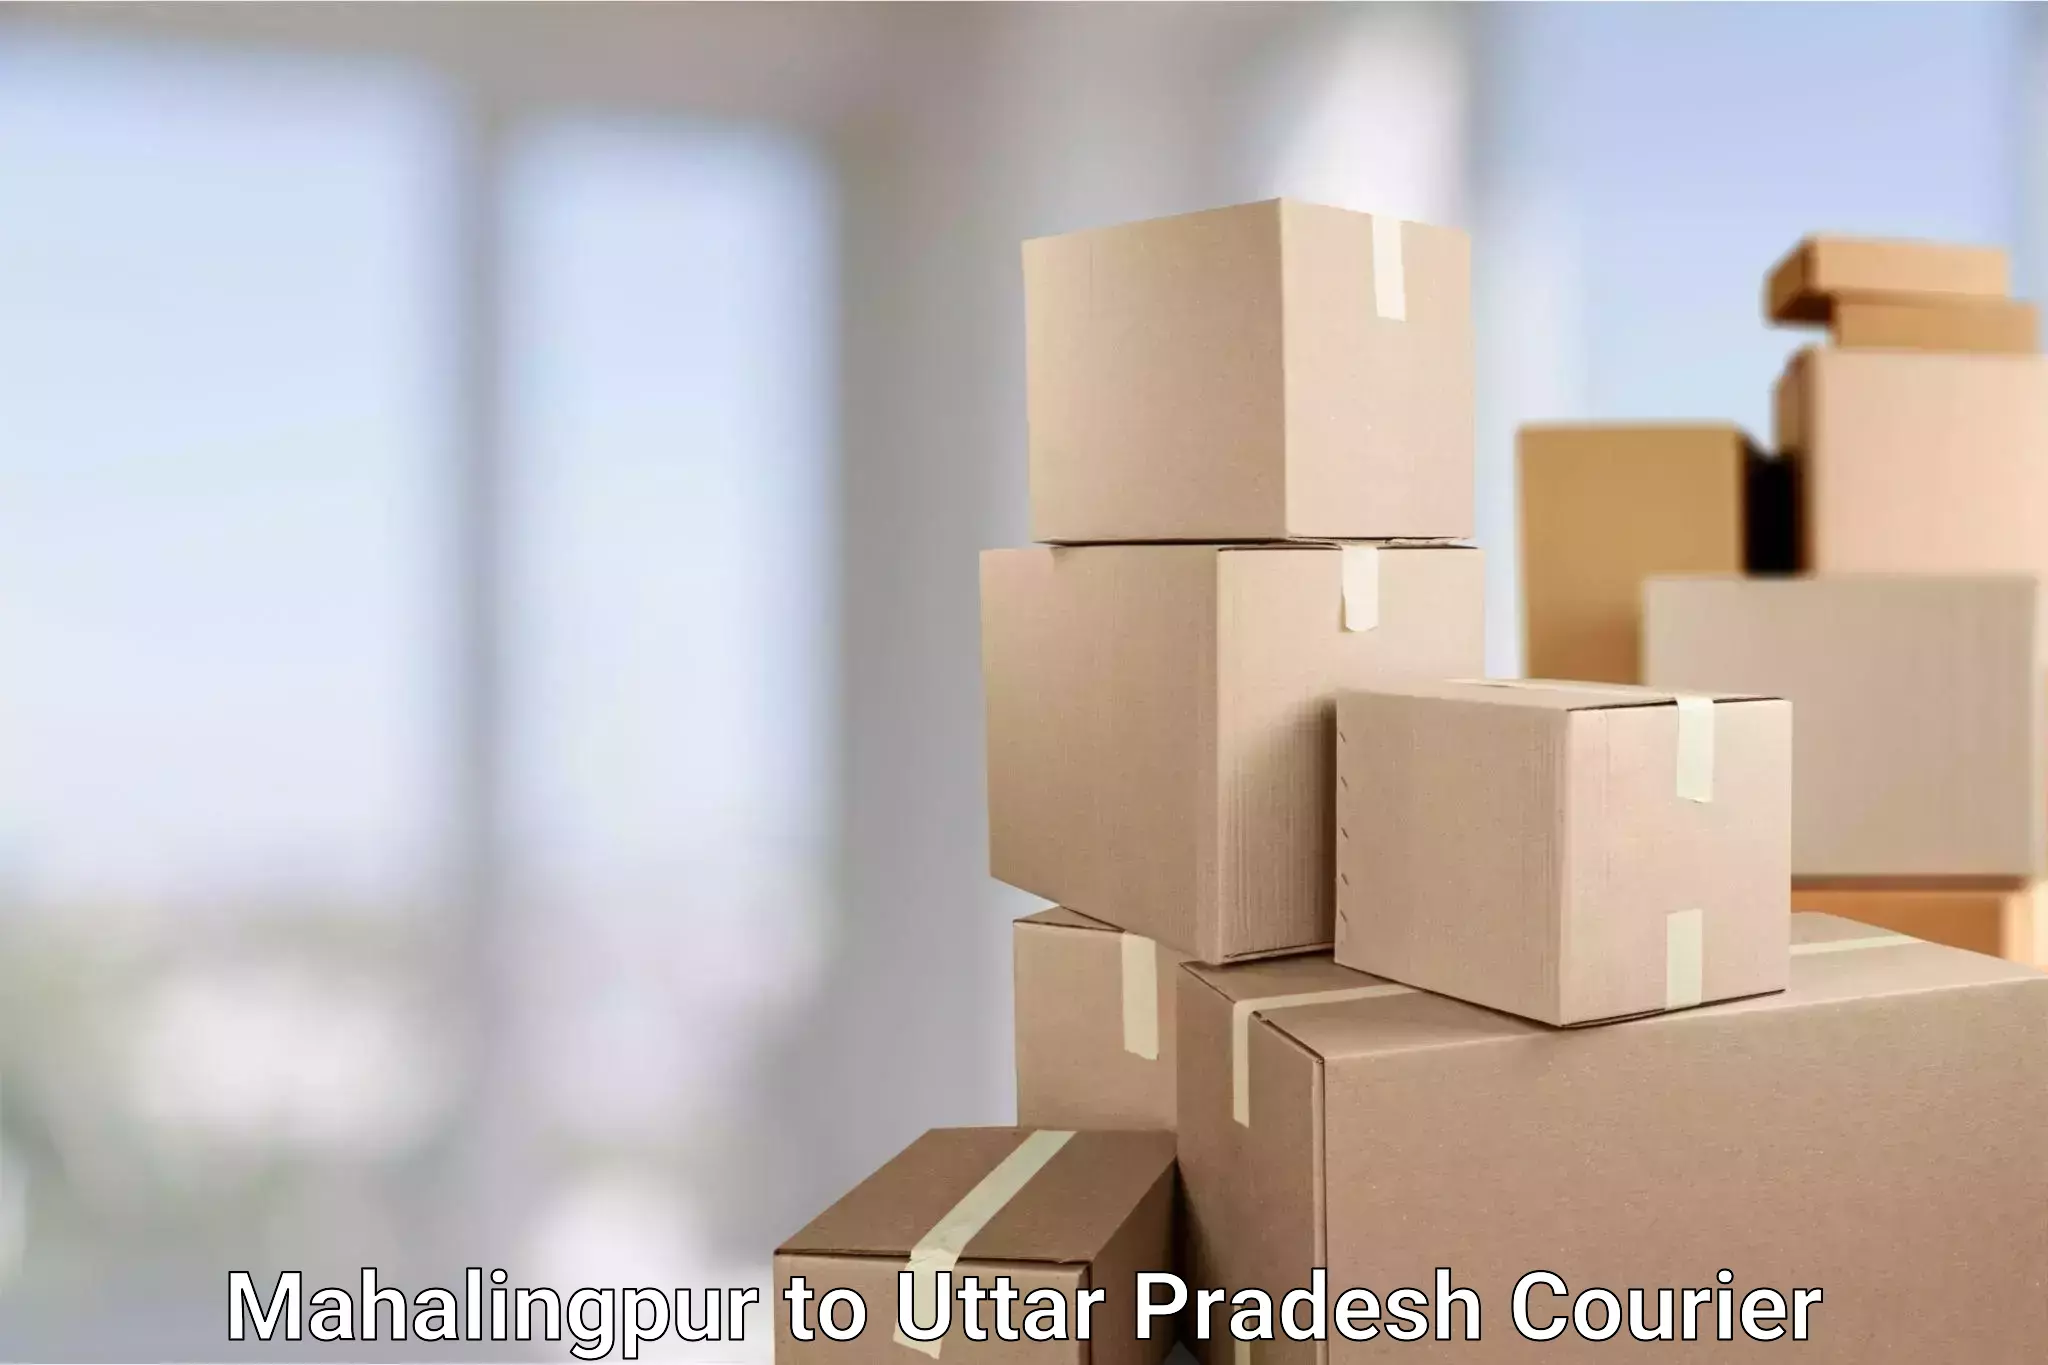 Efficient order fulfillment Mahalingpur to Agra